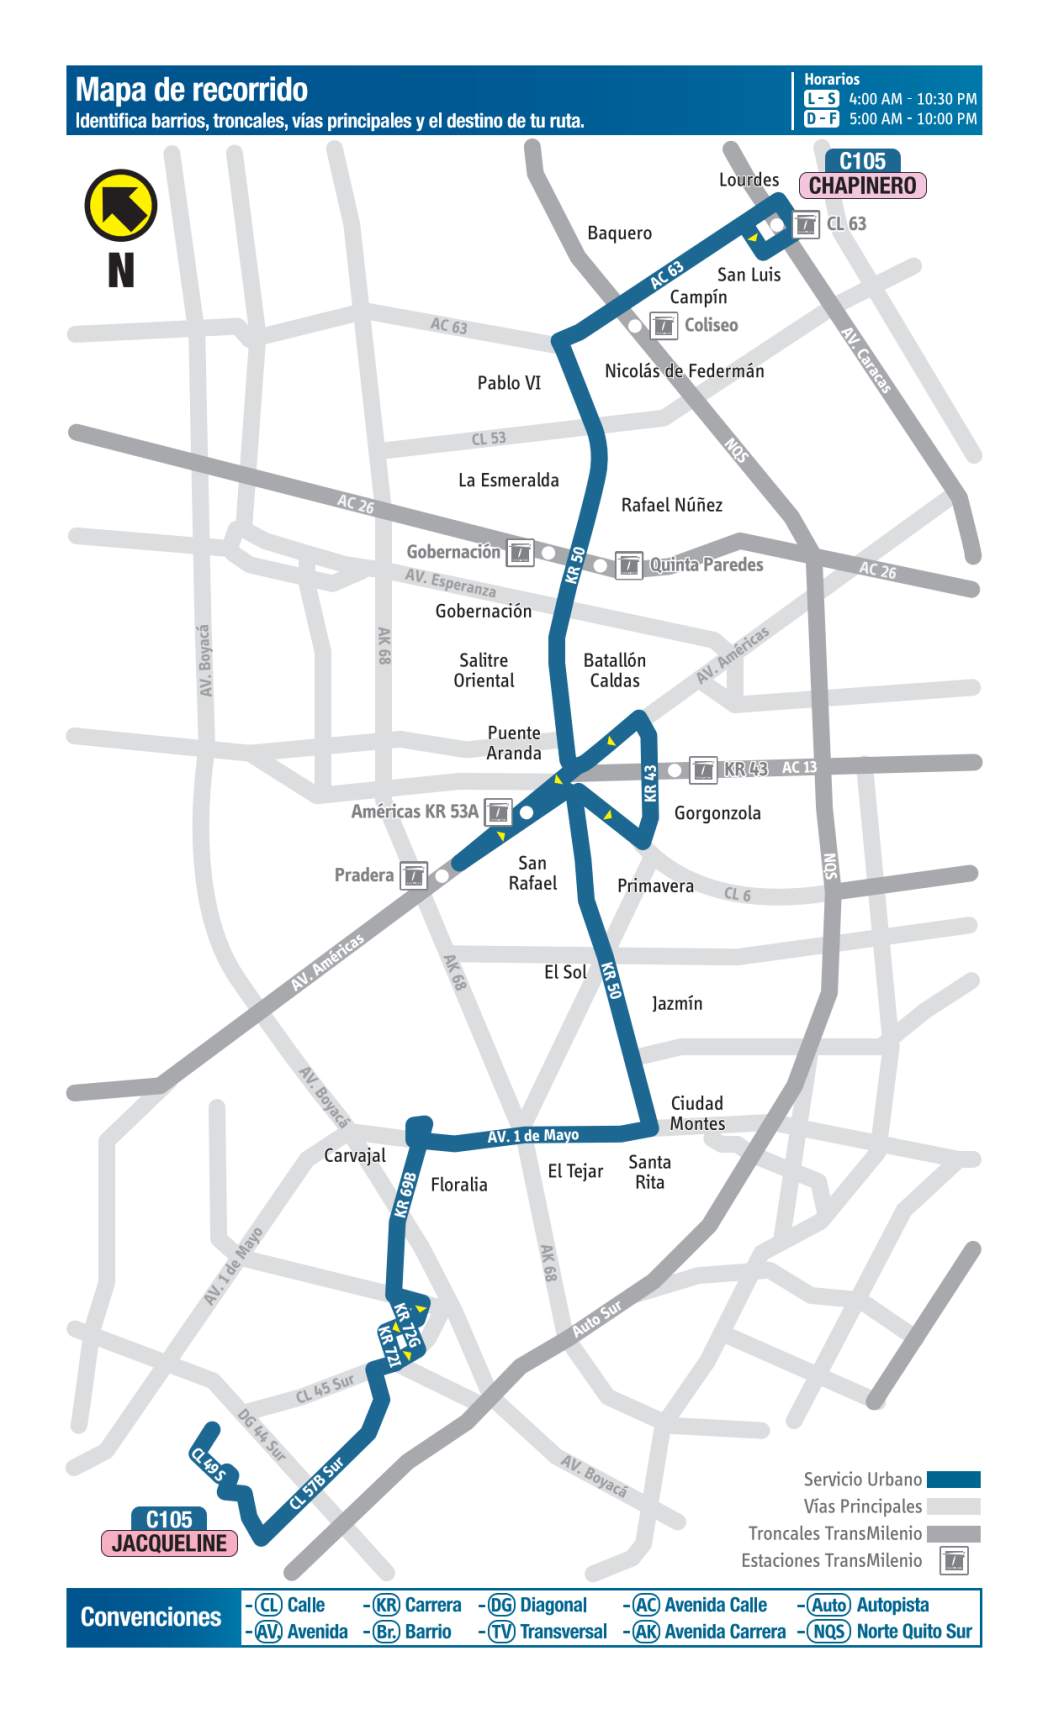 C105 Jacqueline - Chapinero, mapa bus urbano Bogotá